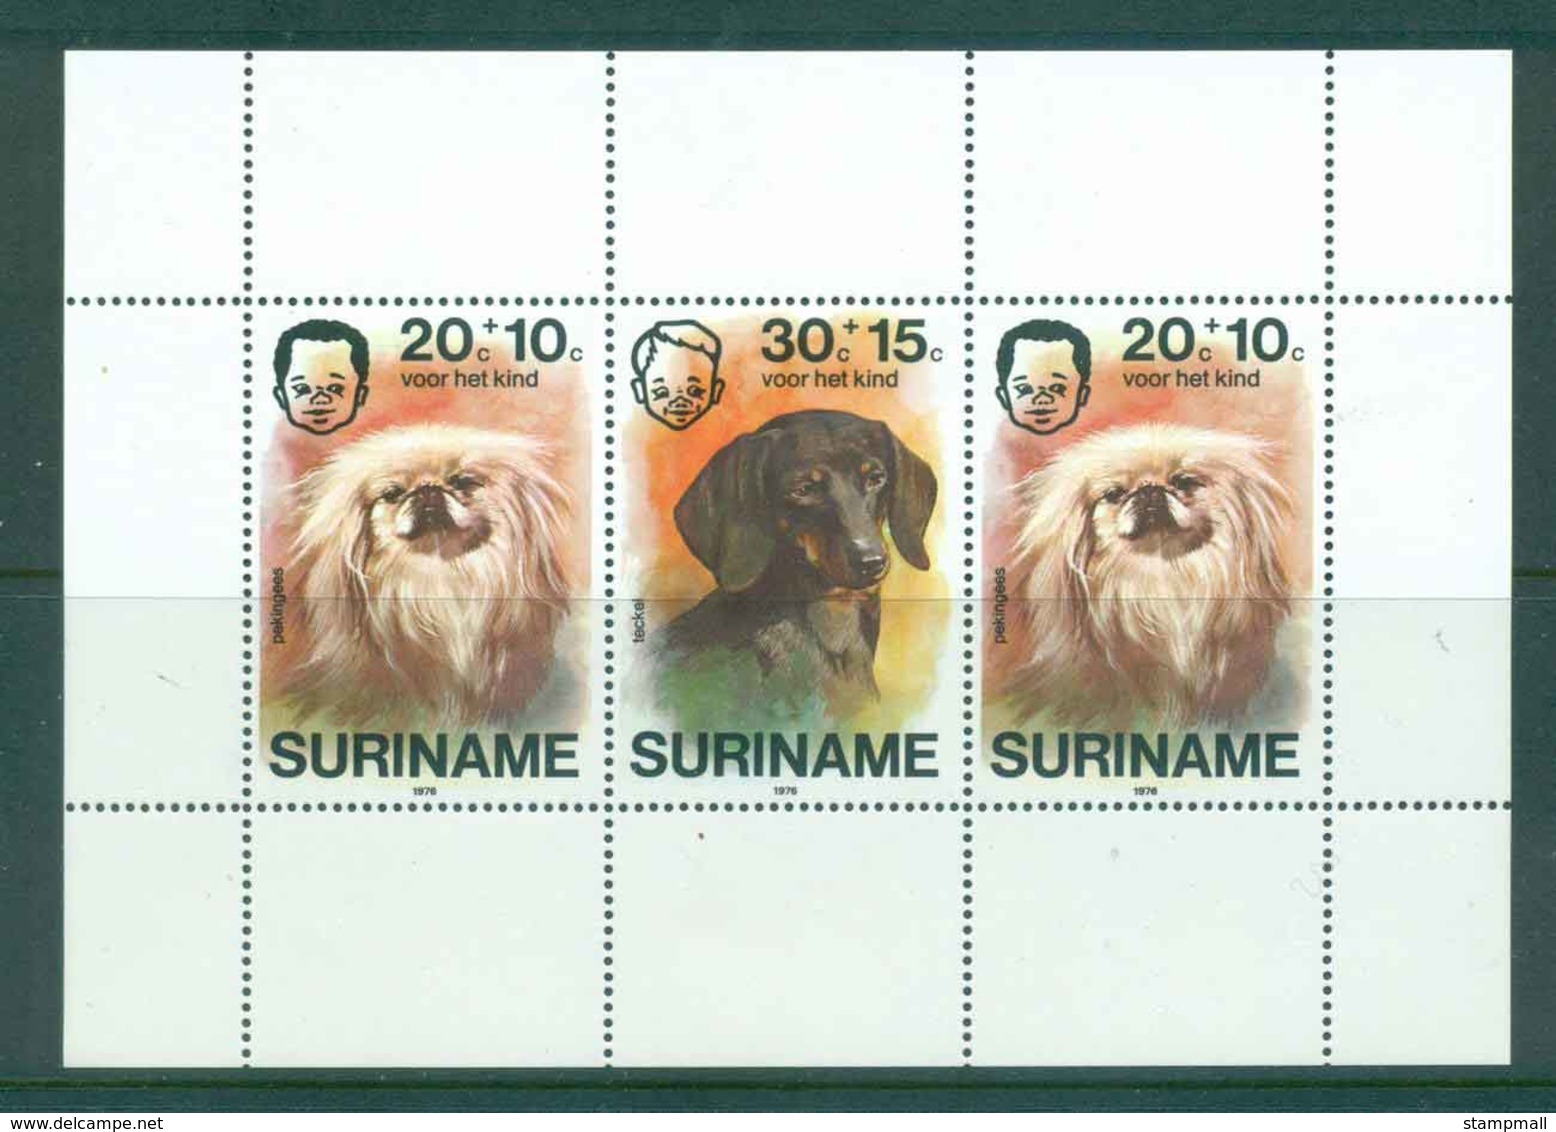 Surinam 1976 Child Welfare, Dogs MS MUH Lot47256 - Surinam